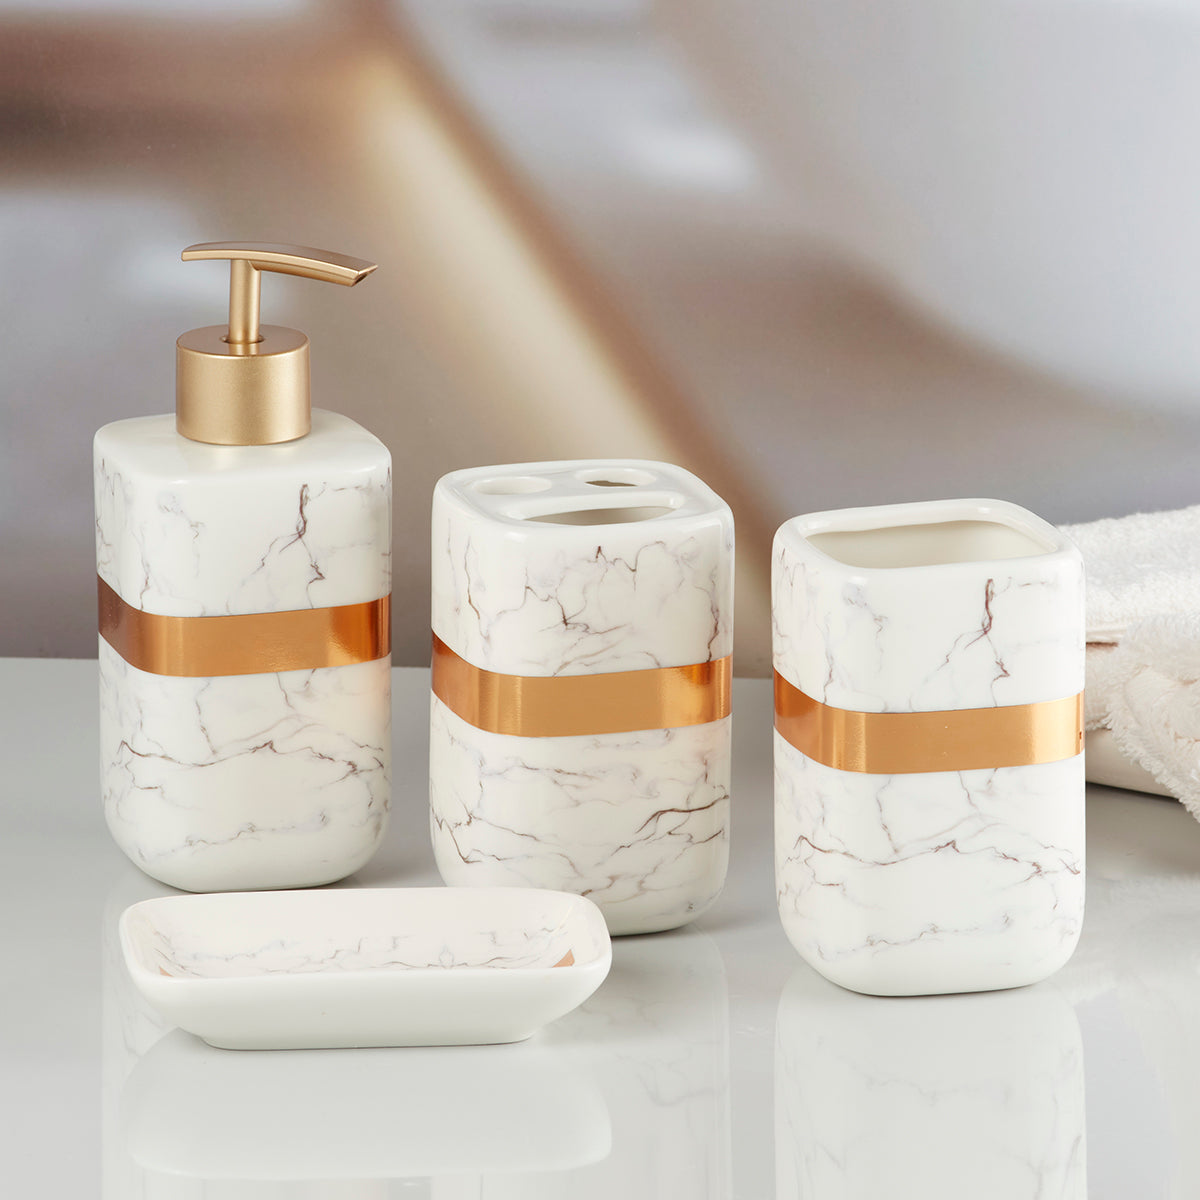 Ceramic Bathroom Accessories Set of 4 Bath Set with Soap Dispenser (8164)